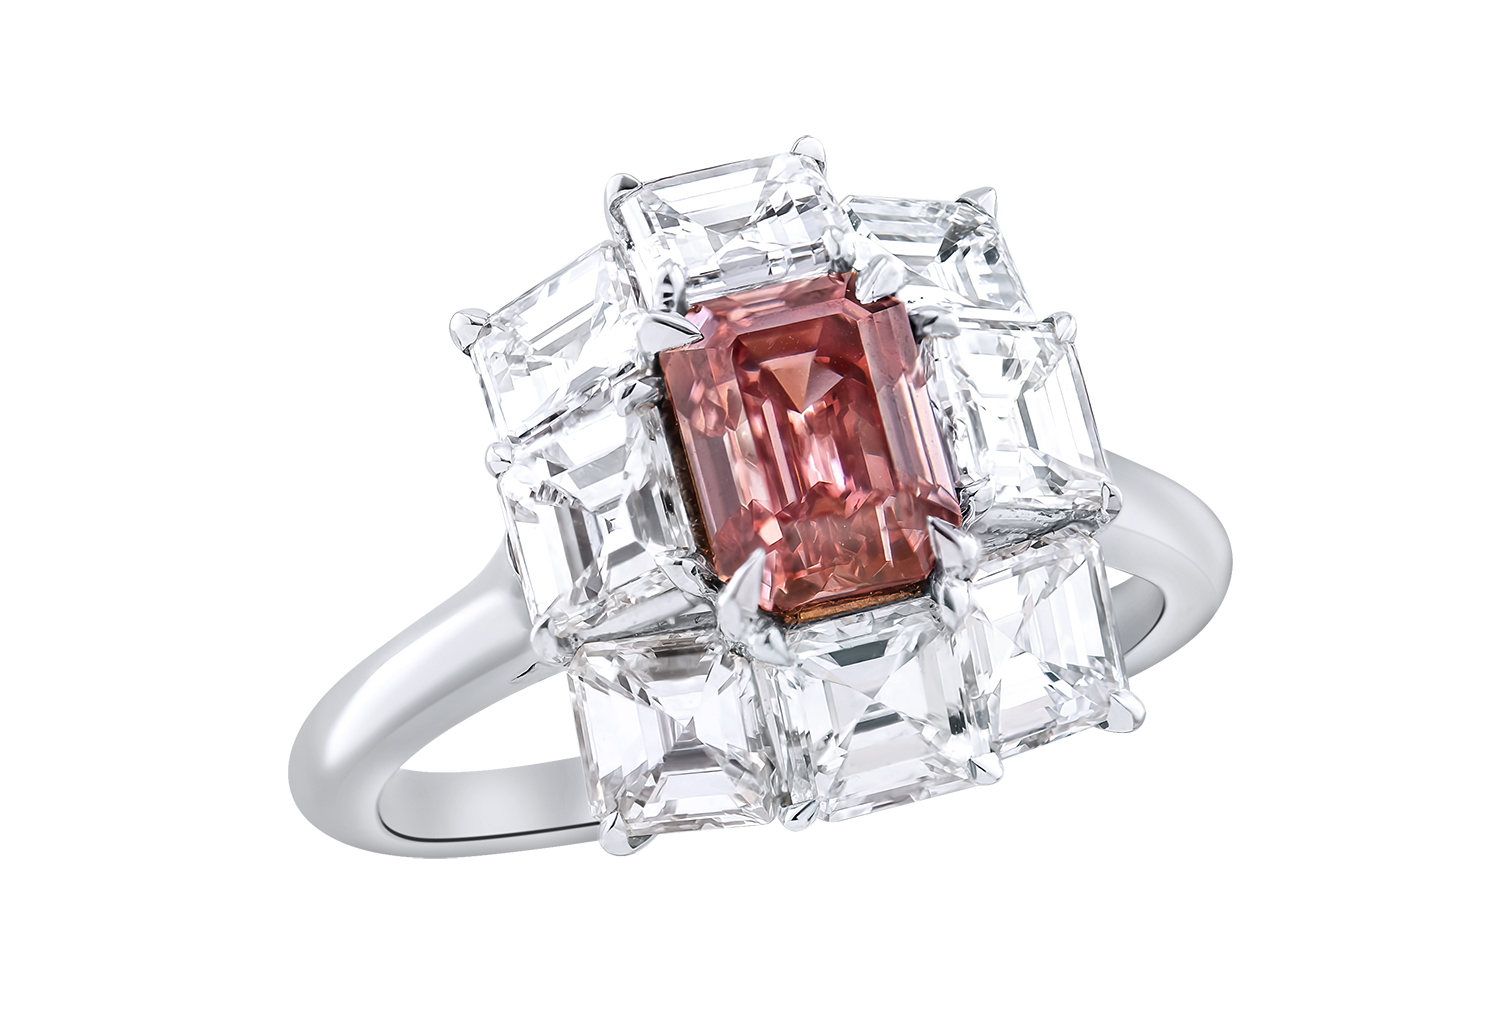 INSTORE Design Awards 2022 &#8211; Colored Diamond Jewelry